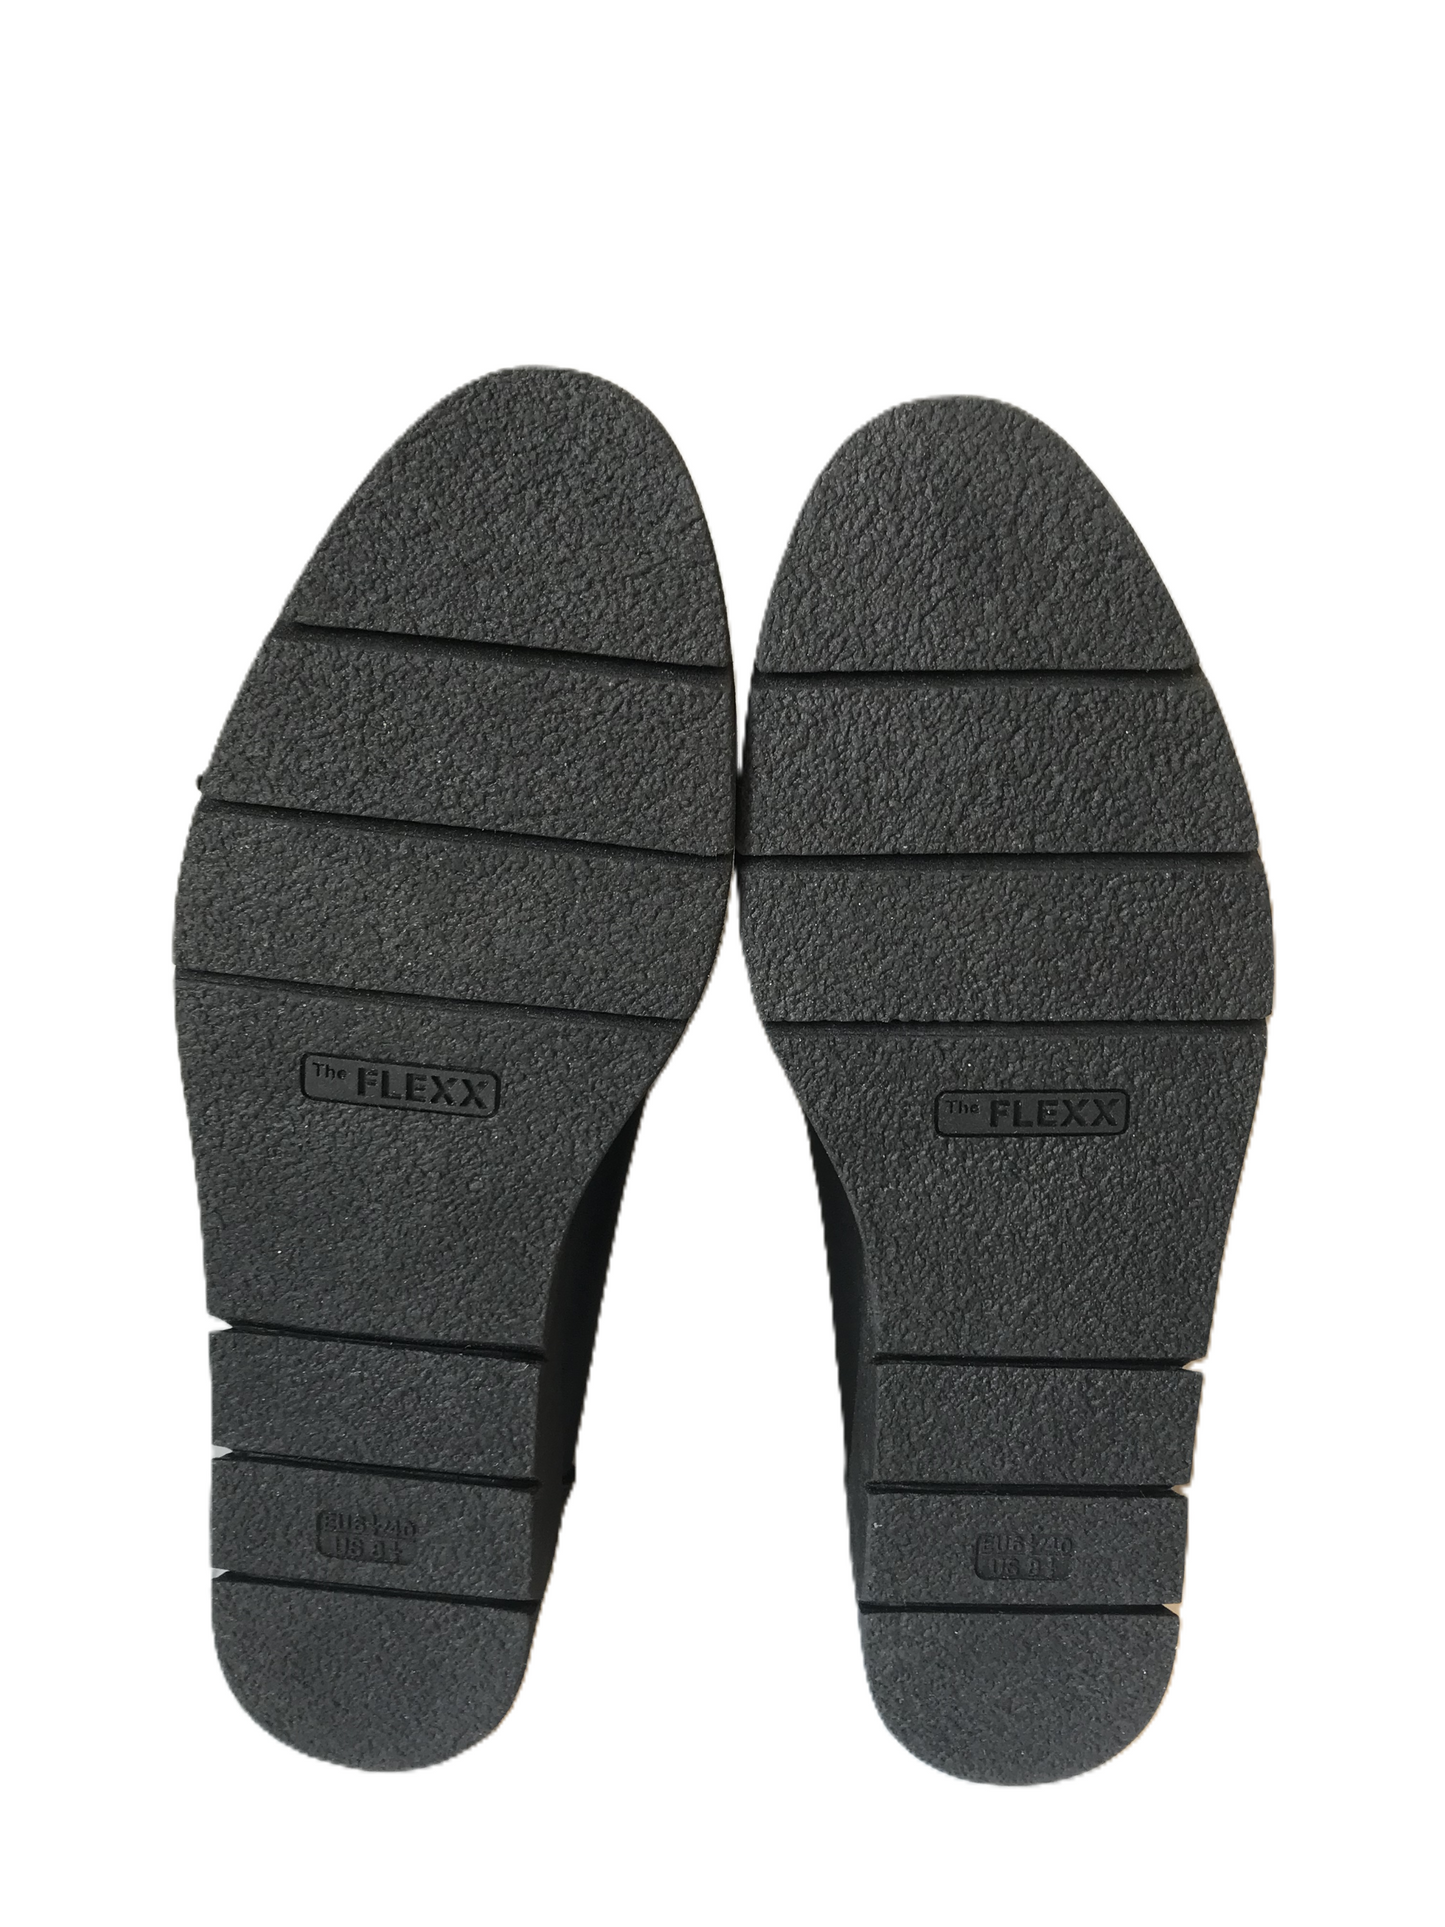 Black Shoes Flats By The Flexx Size: 8.5